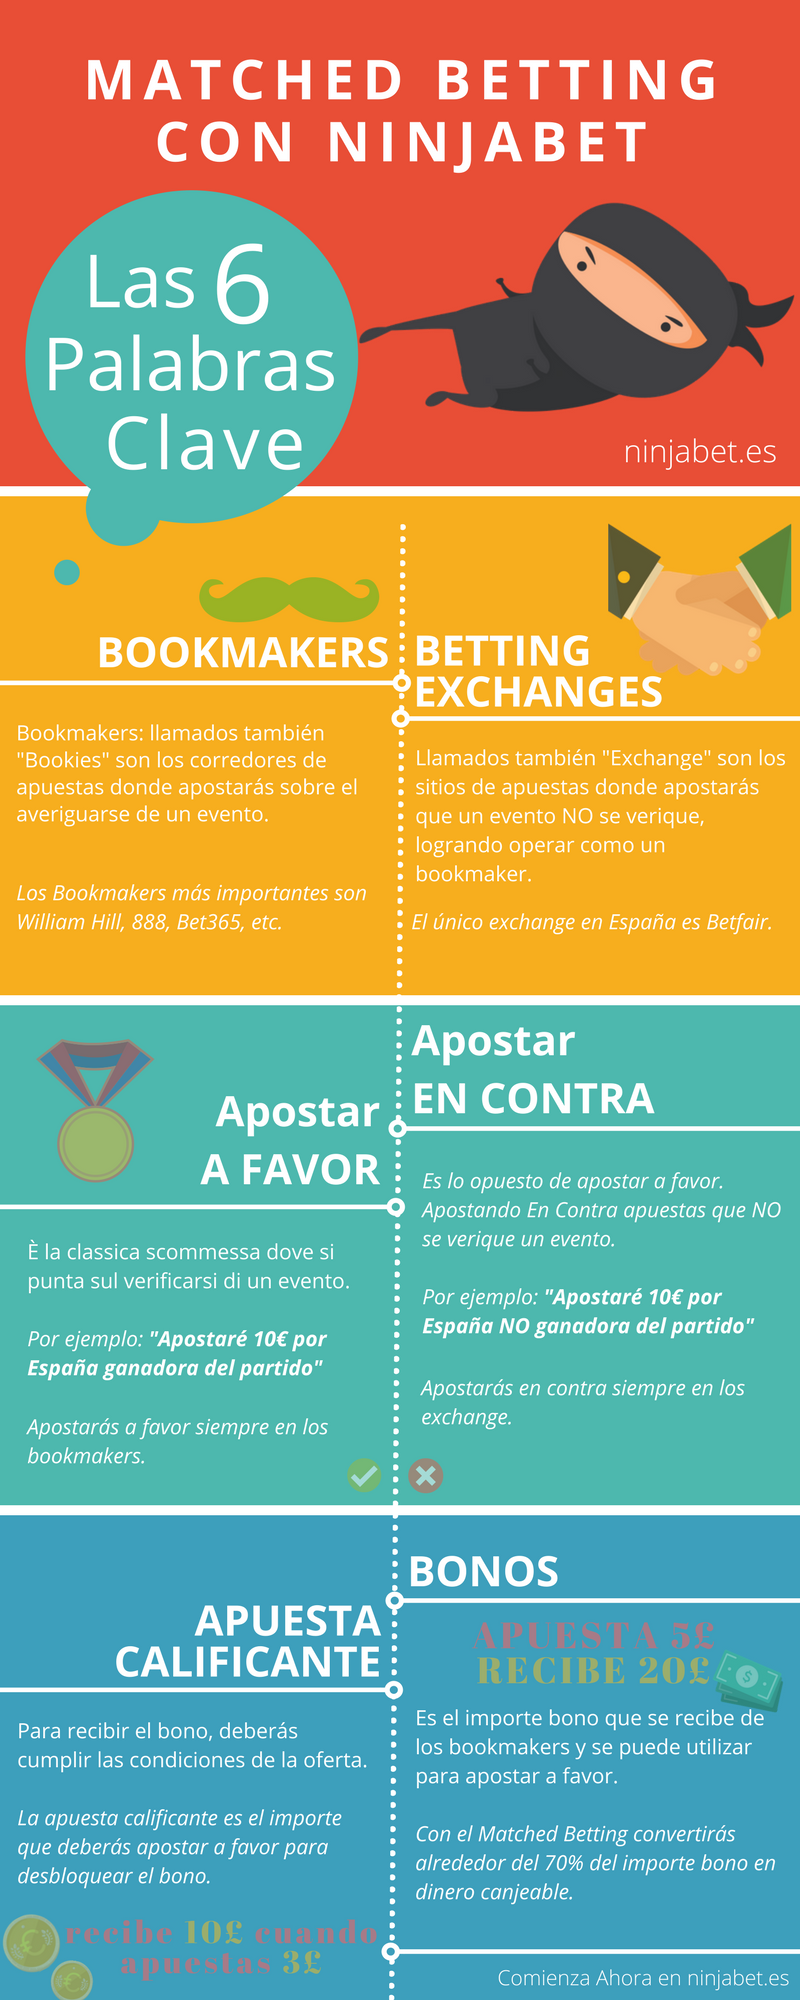 bookmaker-ninjabet-infografía-ninjabet.es-ninjabet.it-Las-6-Palabras-Clave-matched betting-ninjablog-ganar-online-bookmakers-bono-apuesta-a-favor-apuesta-a-contra-betfair-exchange-gráficos-blog-png-jpg